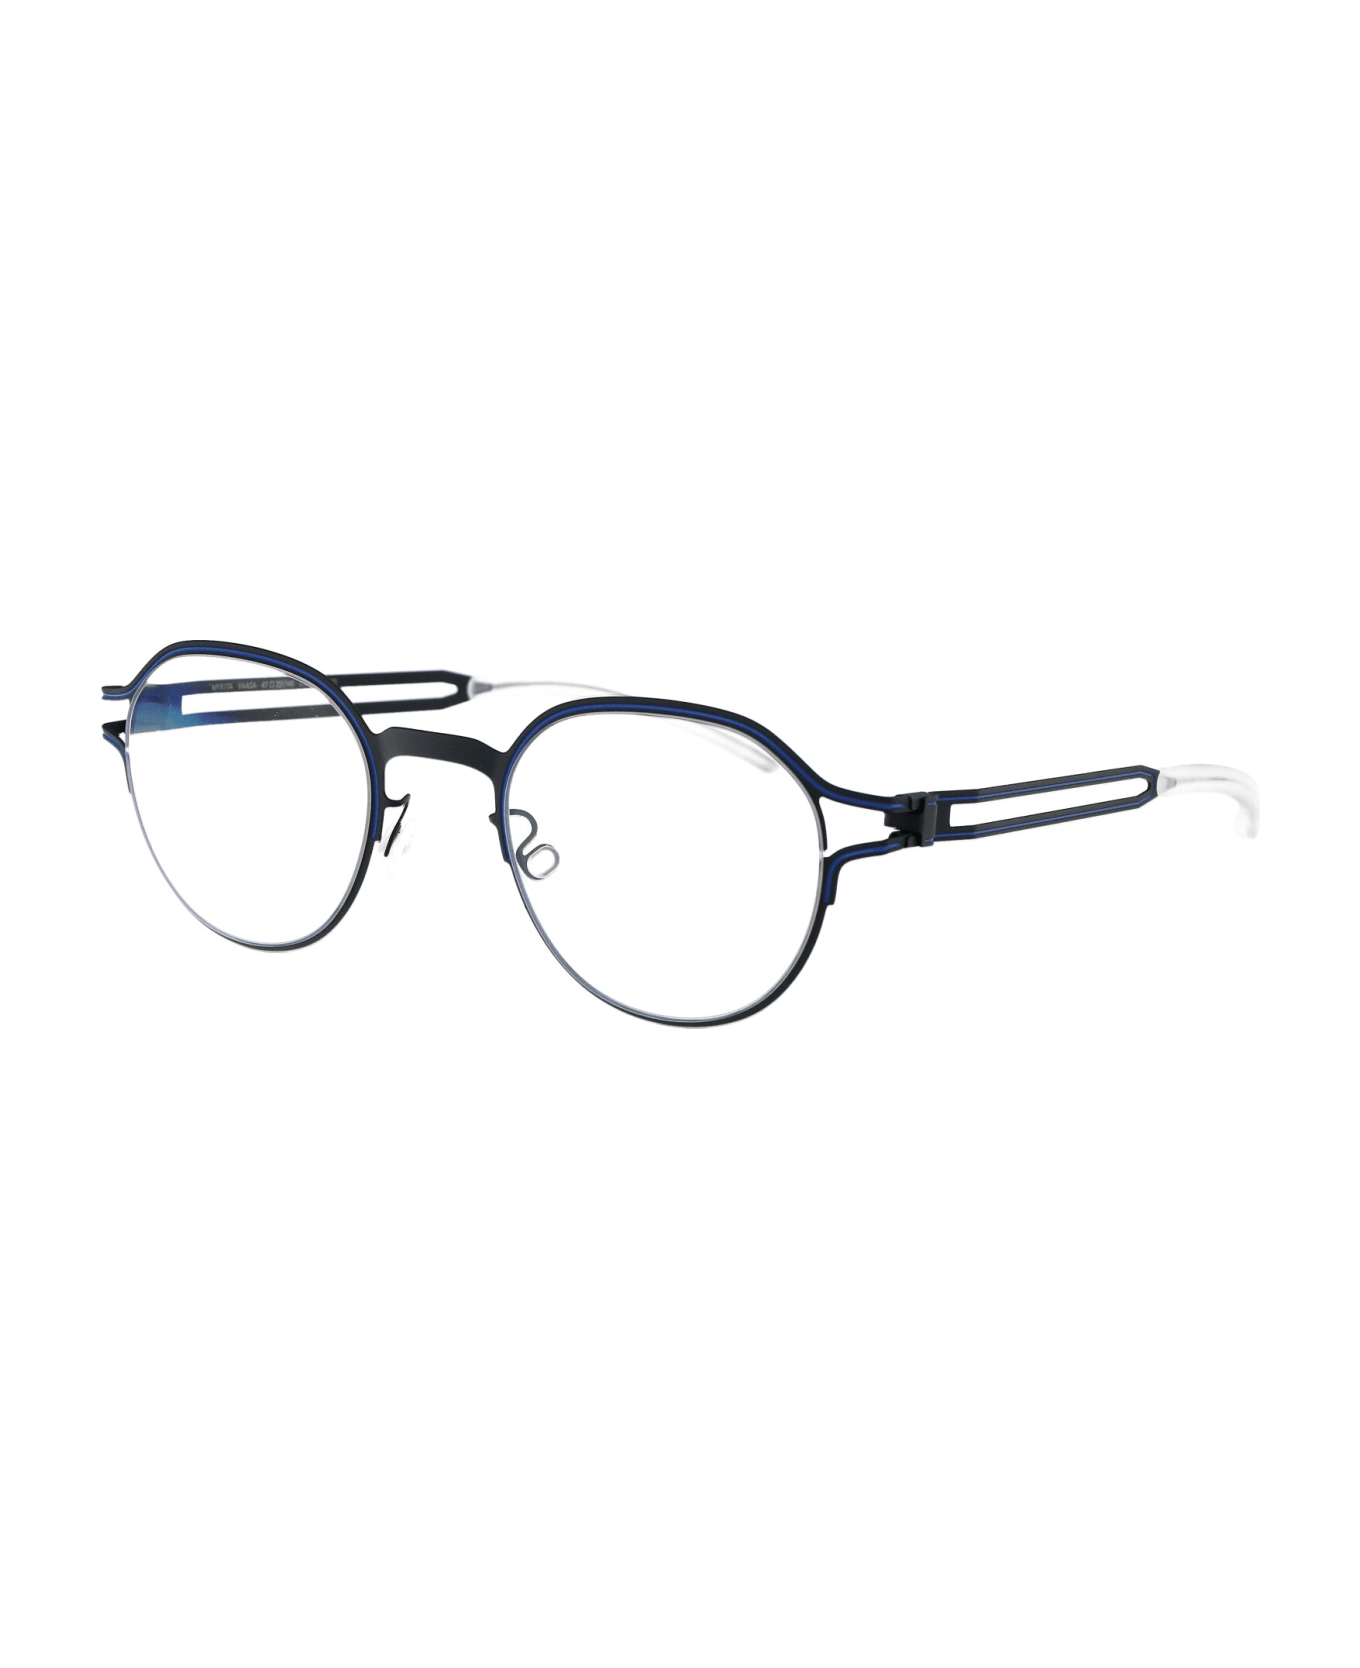 Mykita Vaasa Glasses - 514 Indigo/Yale Blue Clear